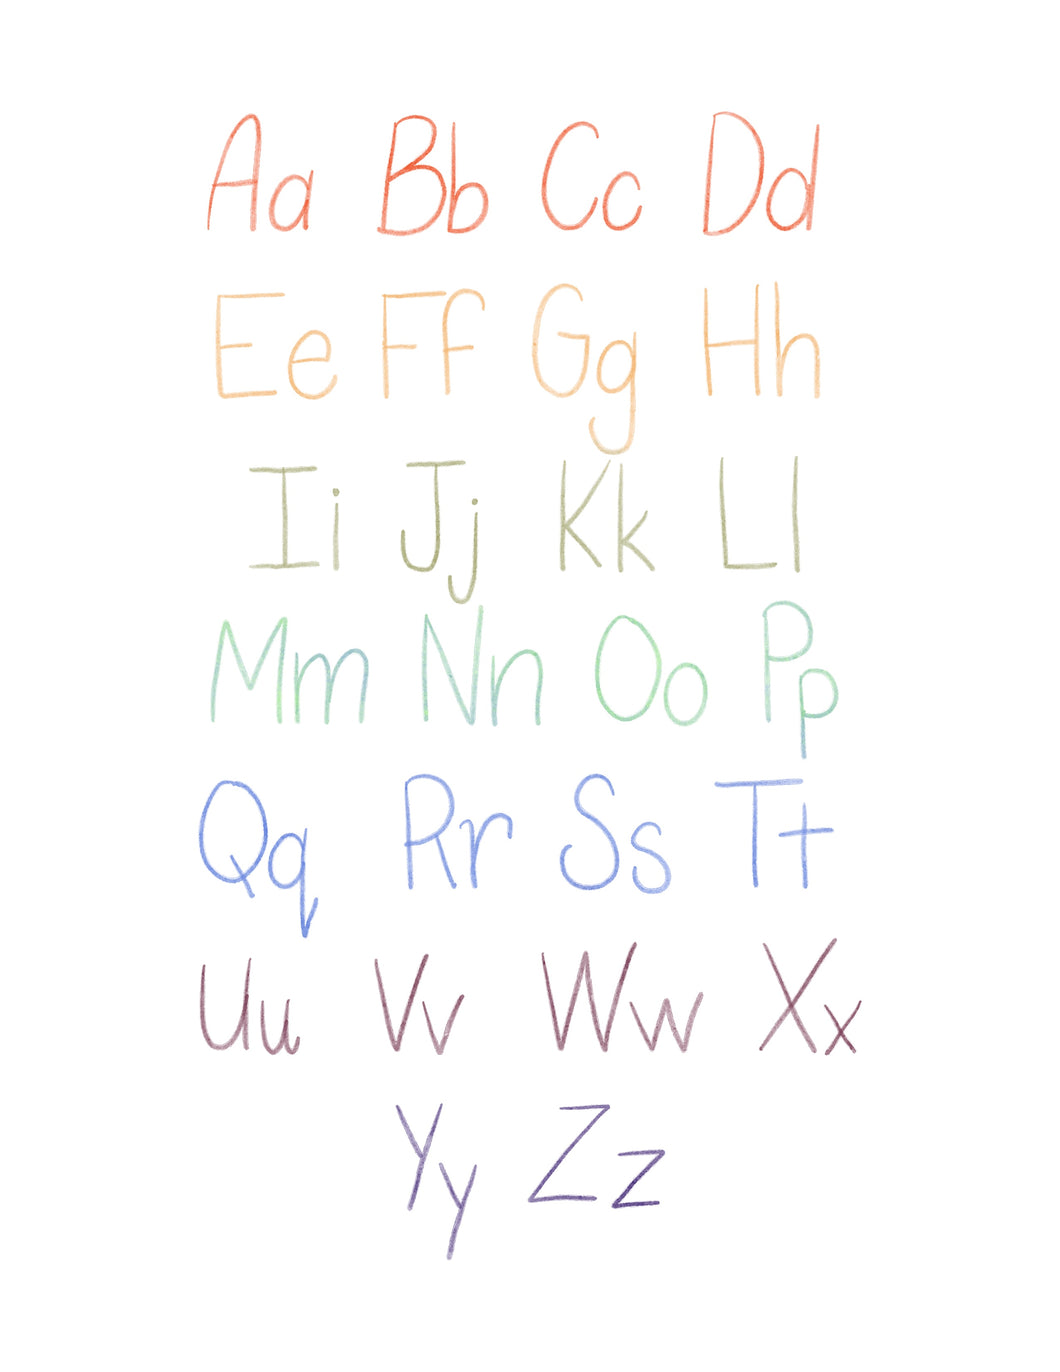 Alphabet Printed